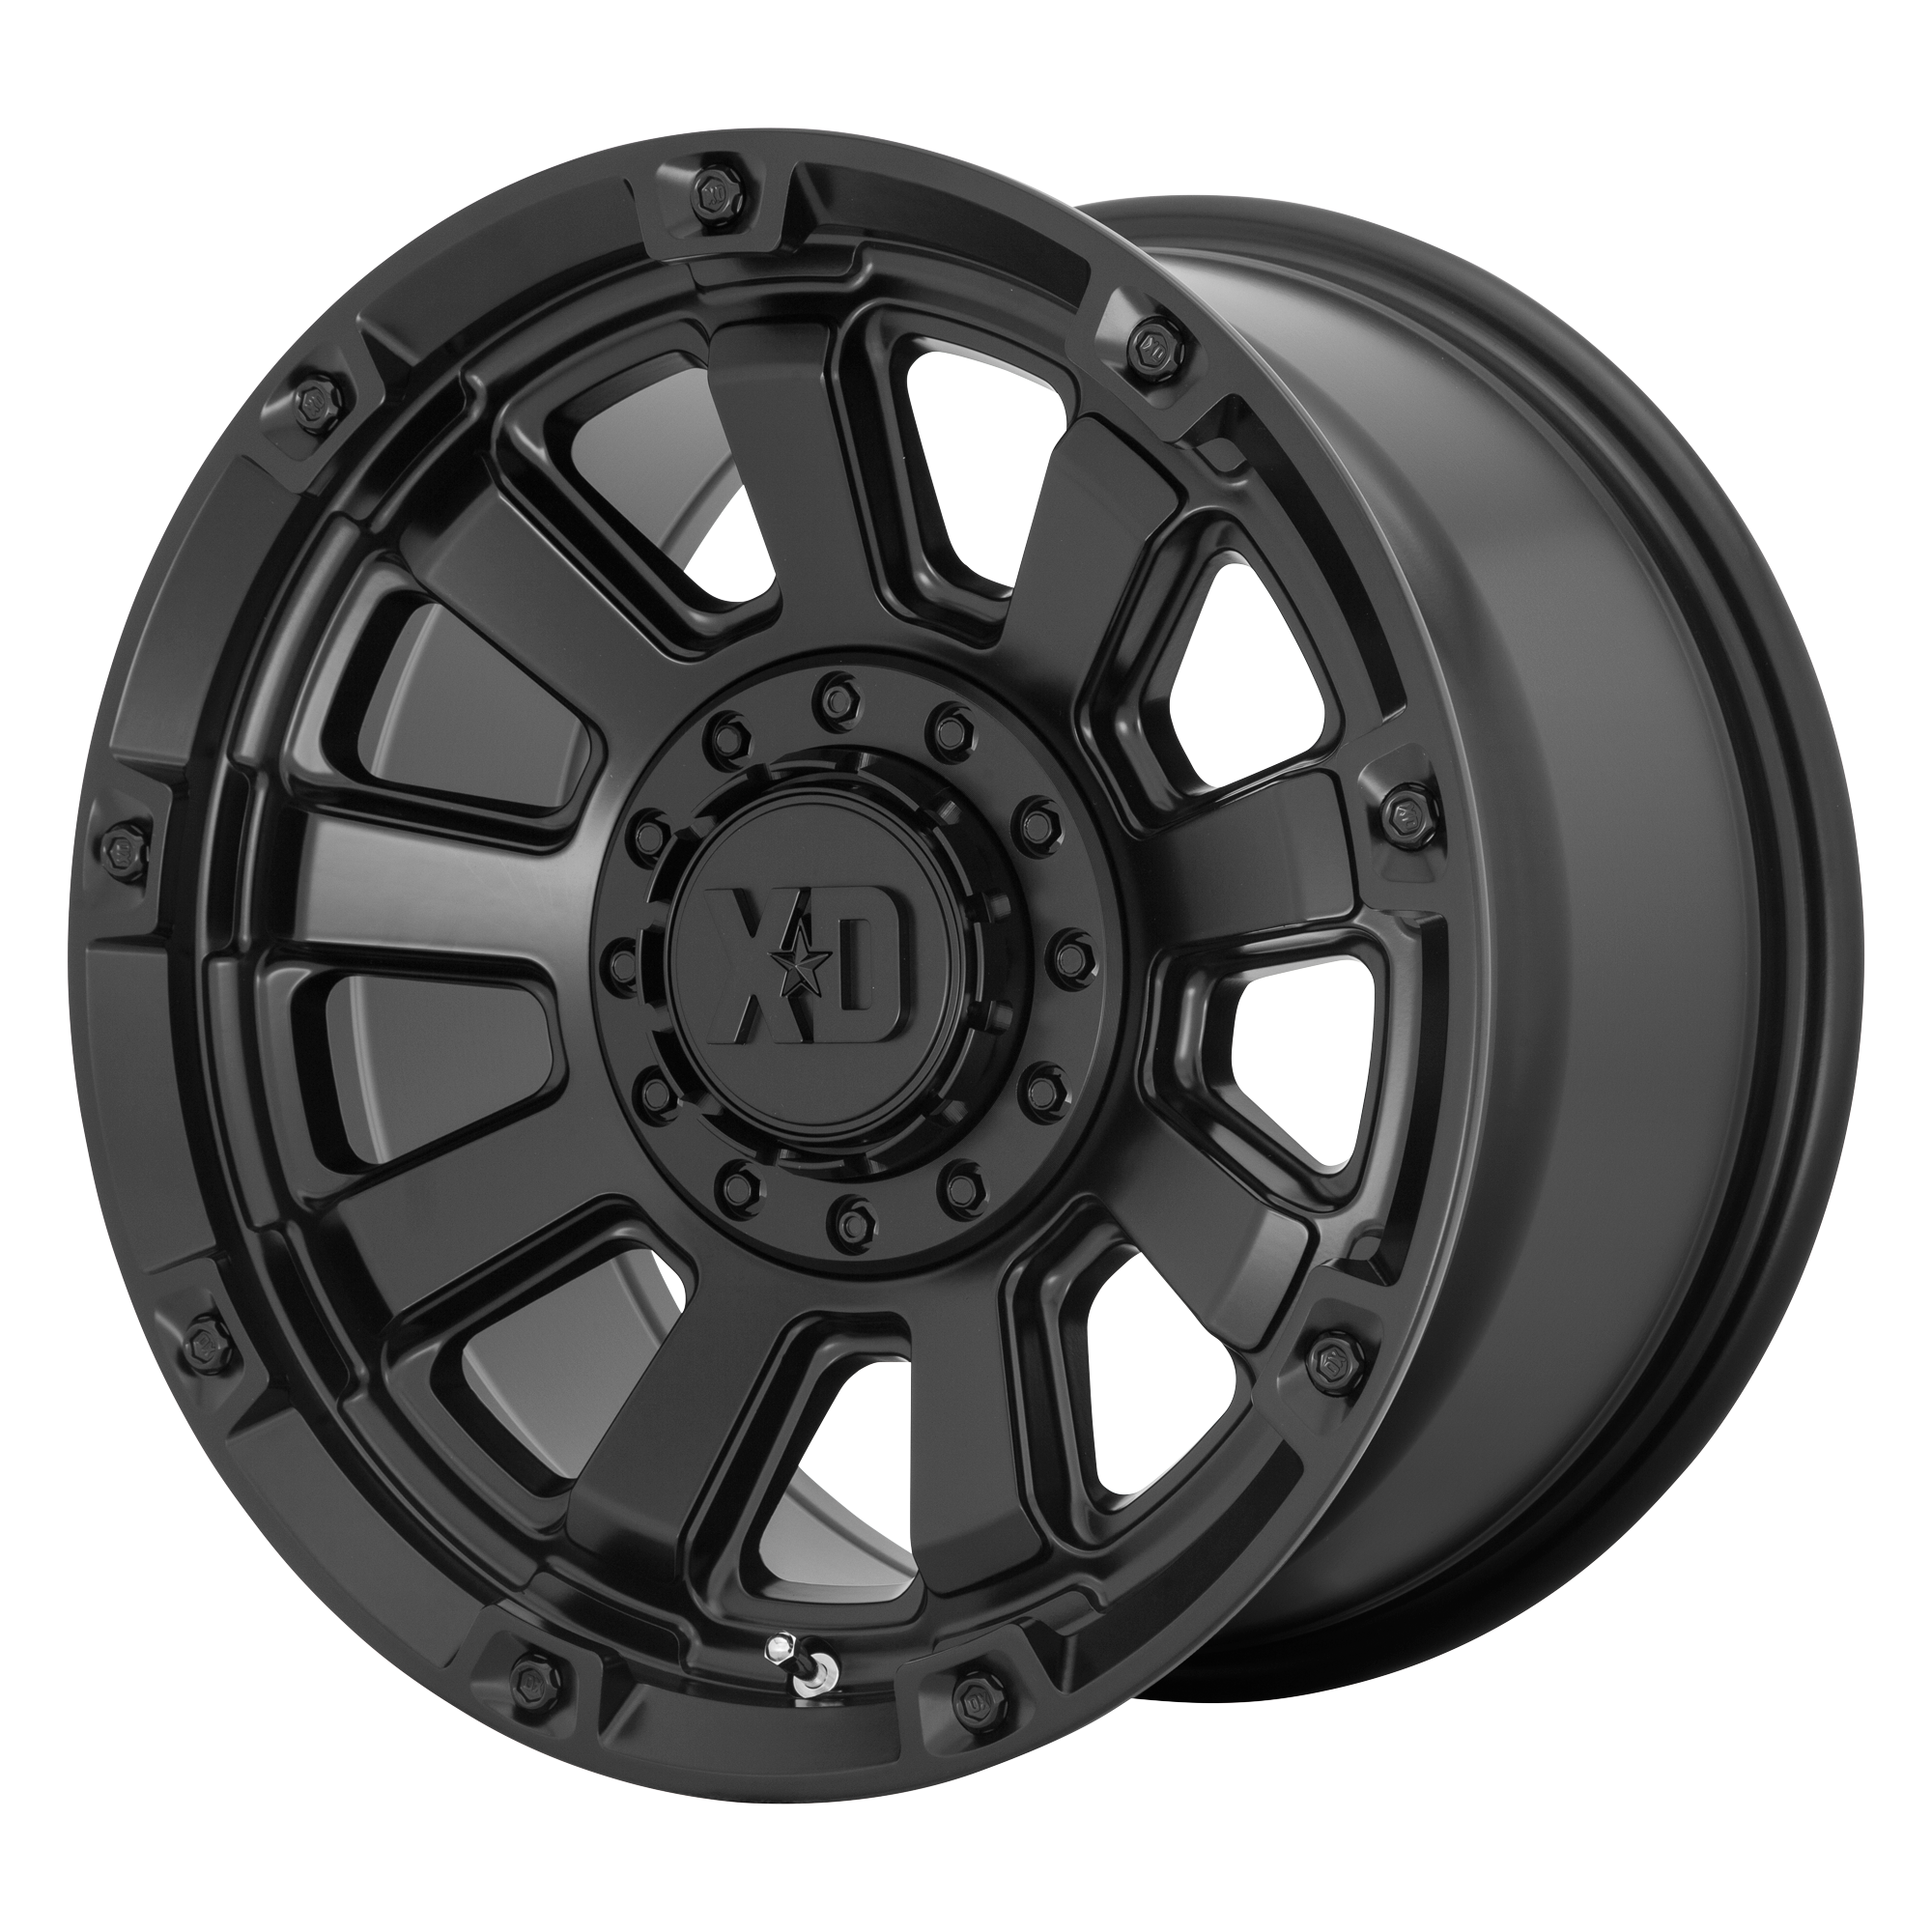 XD 20"x9" Non-Chrome Satin Black Custom Wheel ARSWCWXD85229080700